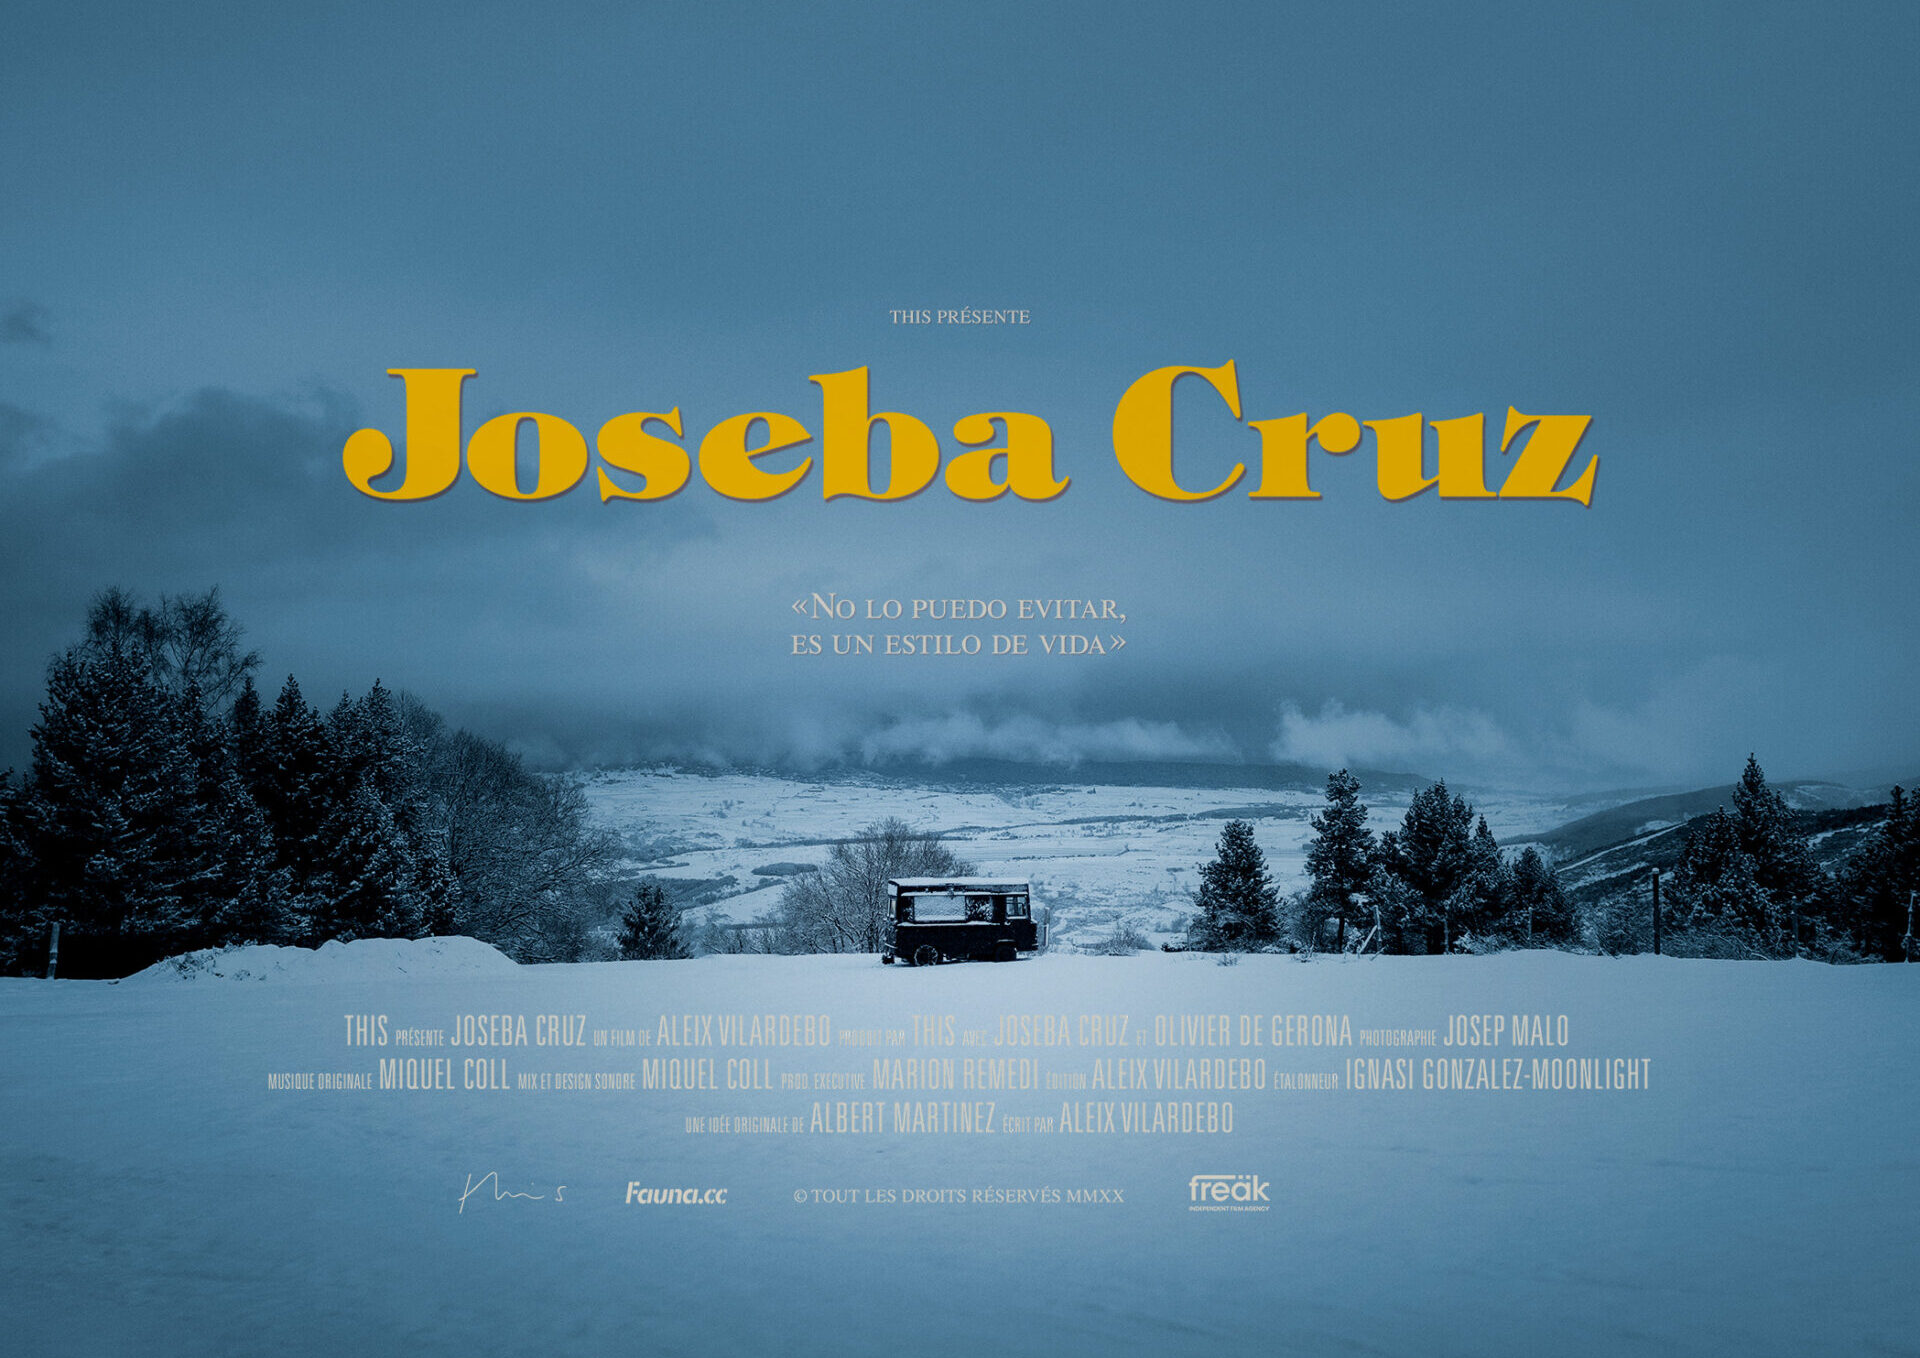 Joseba-Cruz-Poster-1-2-d